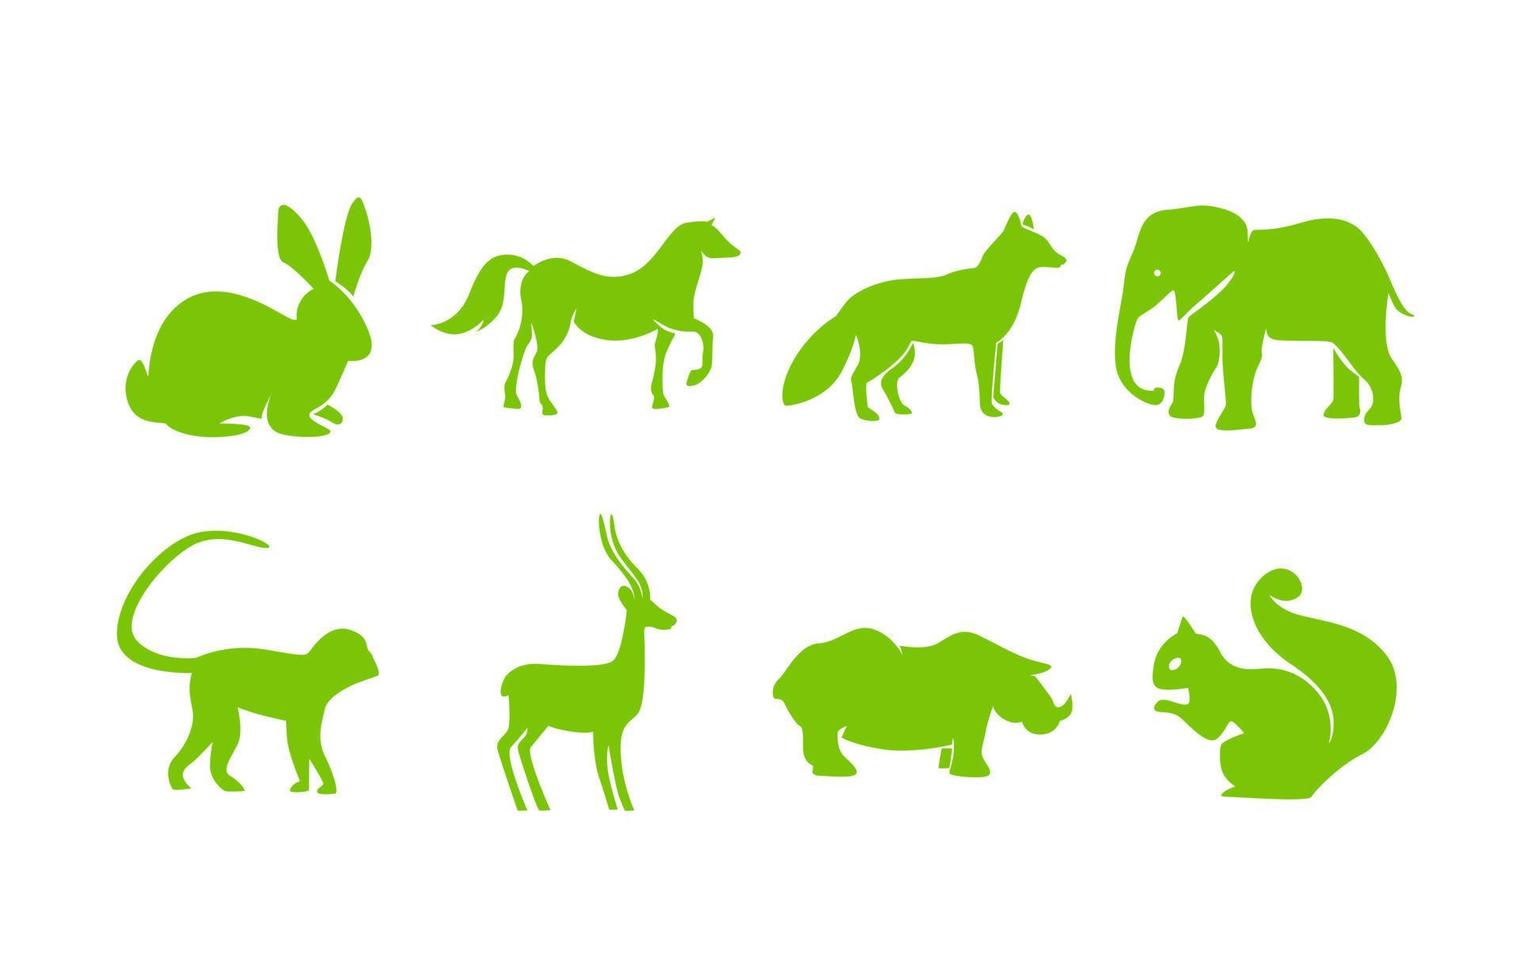 various animal icon or symbol designs vector